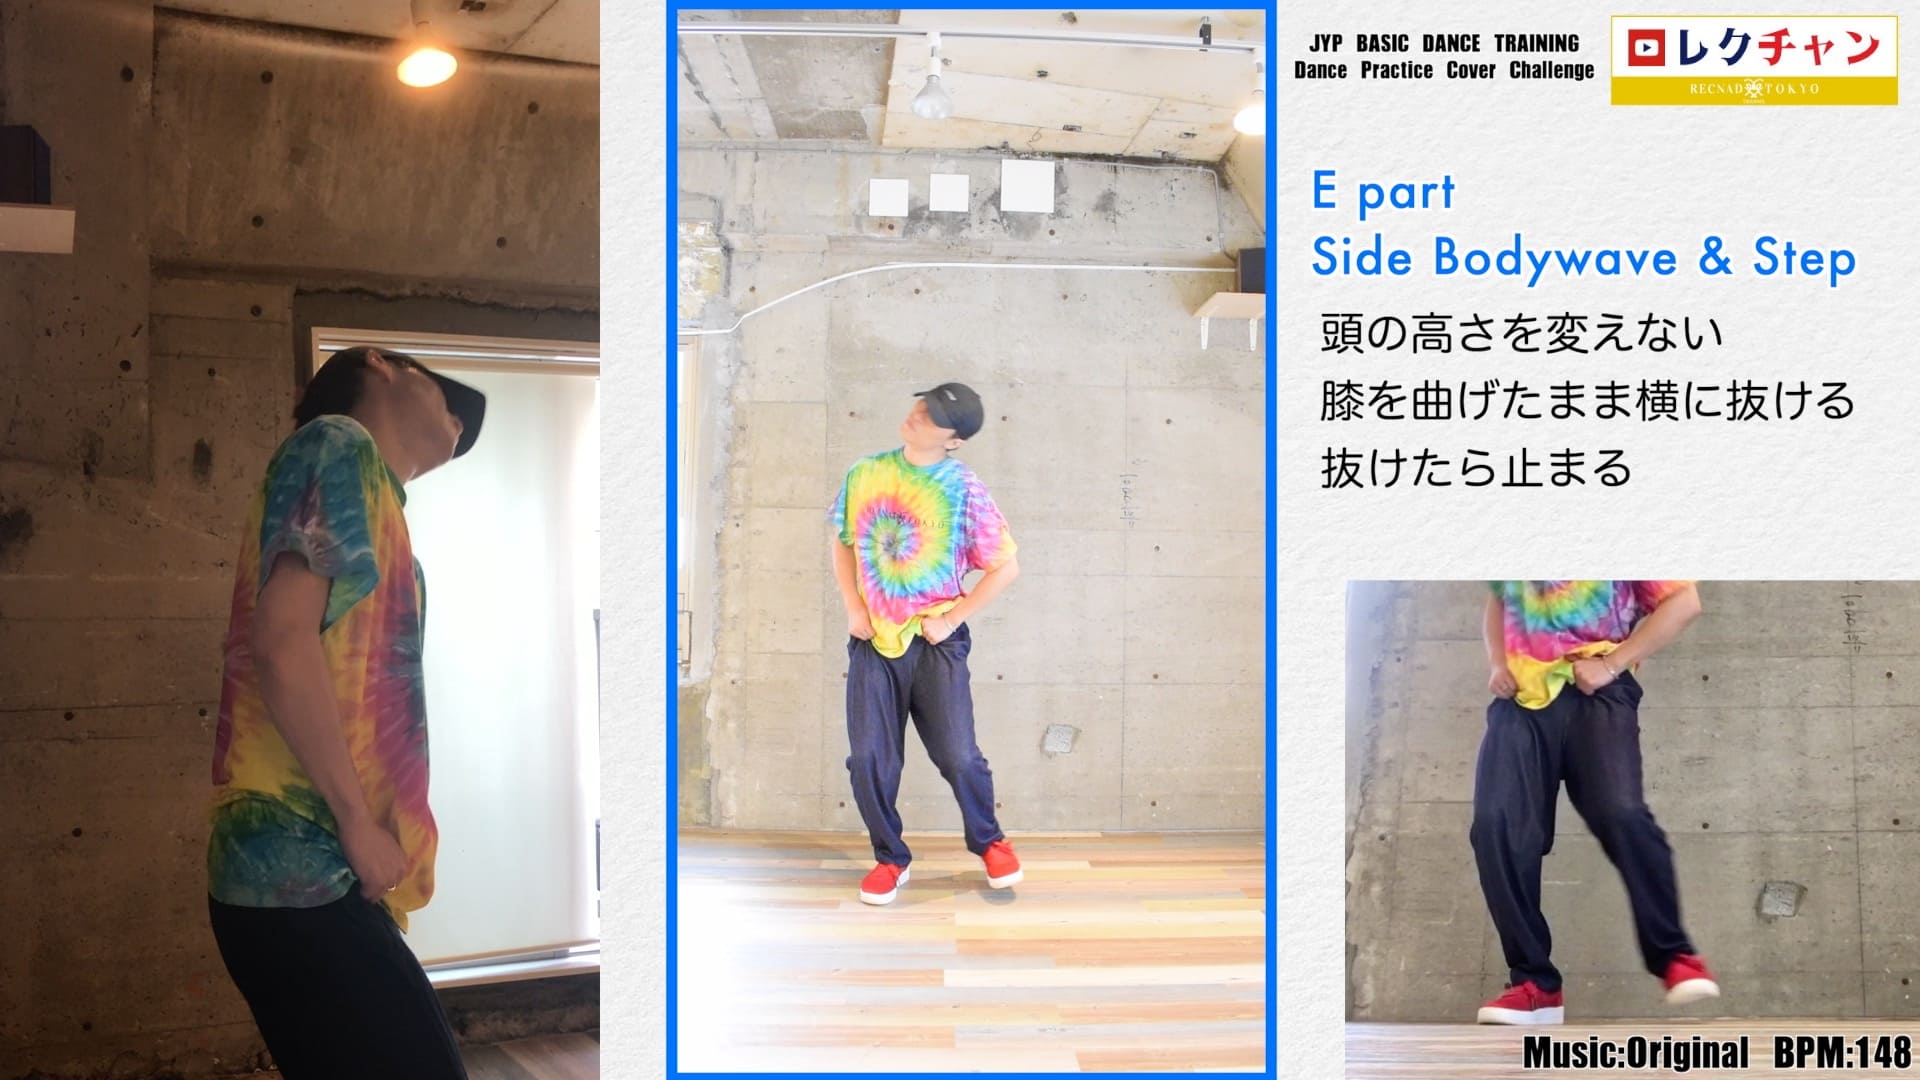 Nizi Project Jyp 基礎ダンス 動作分析e 株式会社 Recnad Tokyo ダンス のお仕事何でもやります